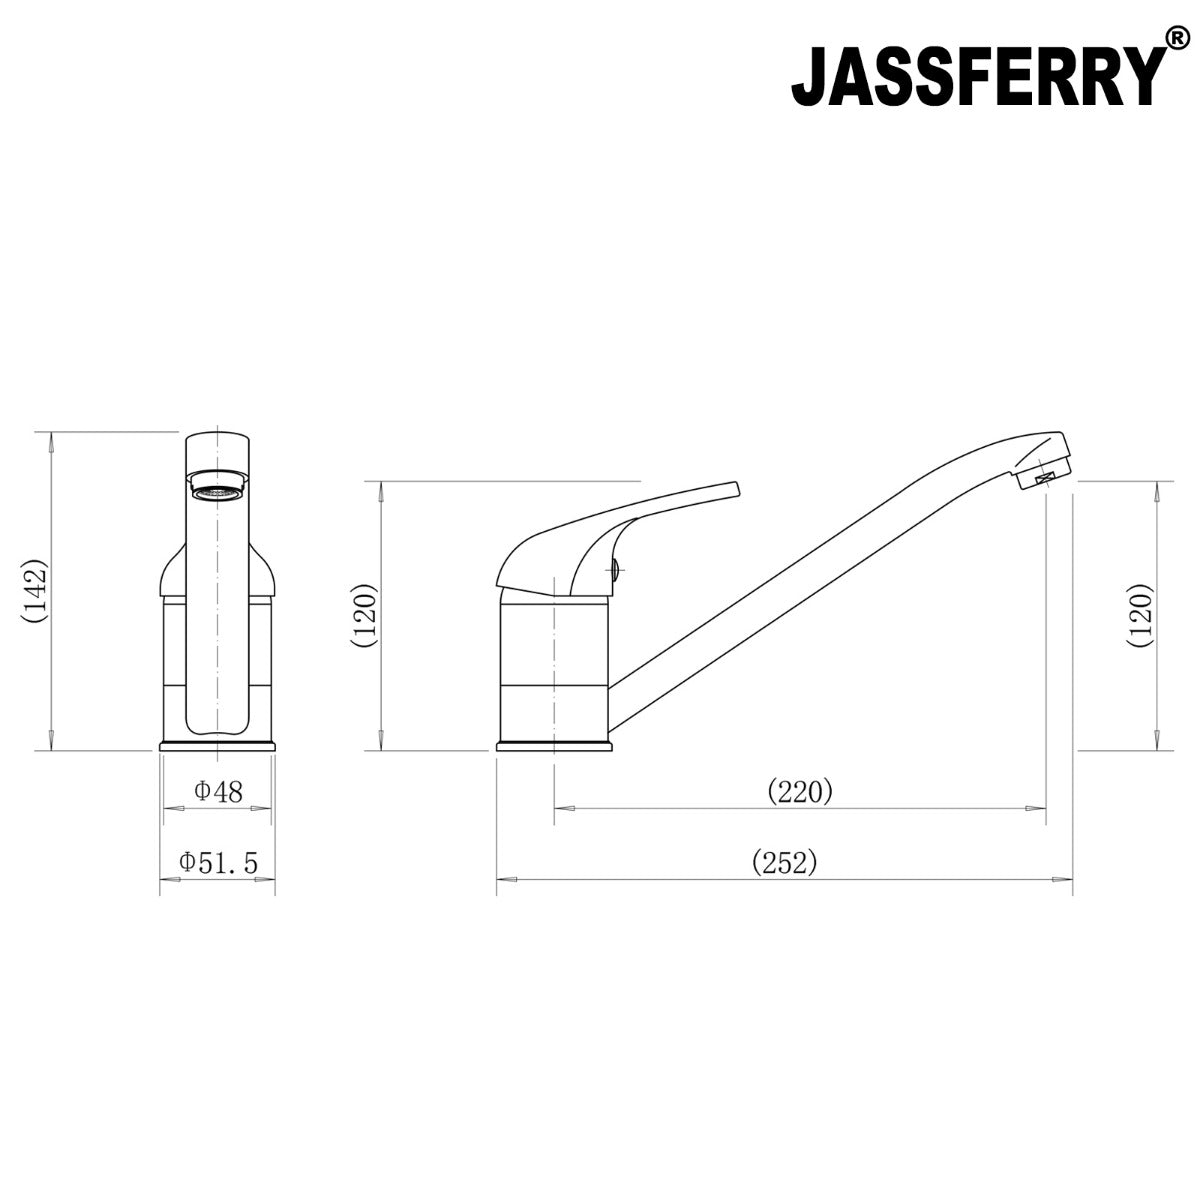 JassferryJASSFERRY Traditional Kitchen Sink Tap Mixer Monobloc Single Lever Swivel SpoutKitchen taps